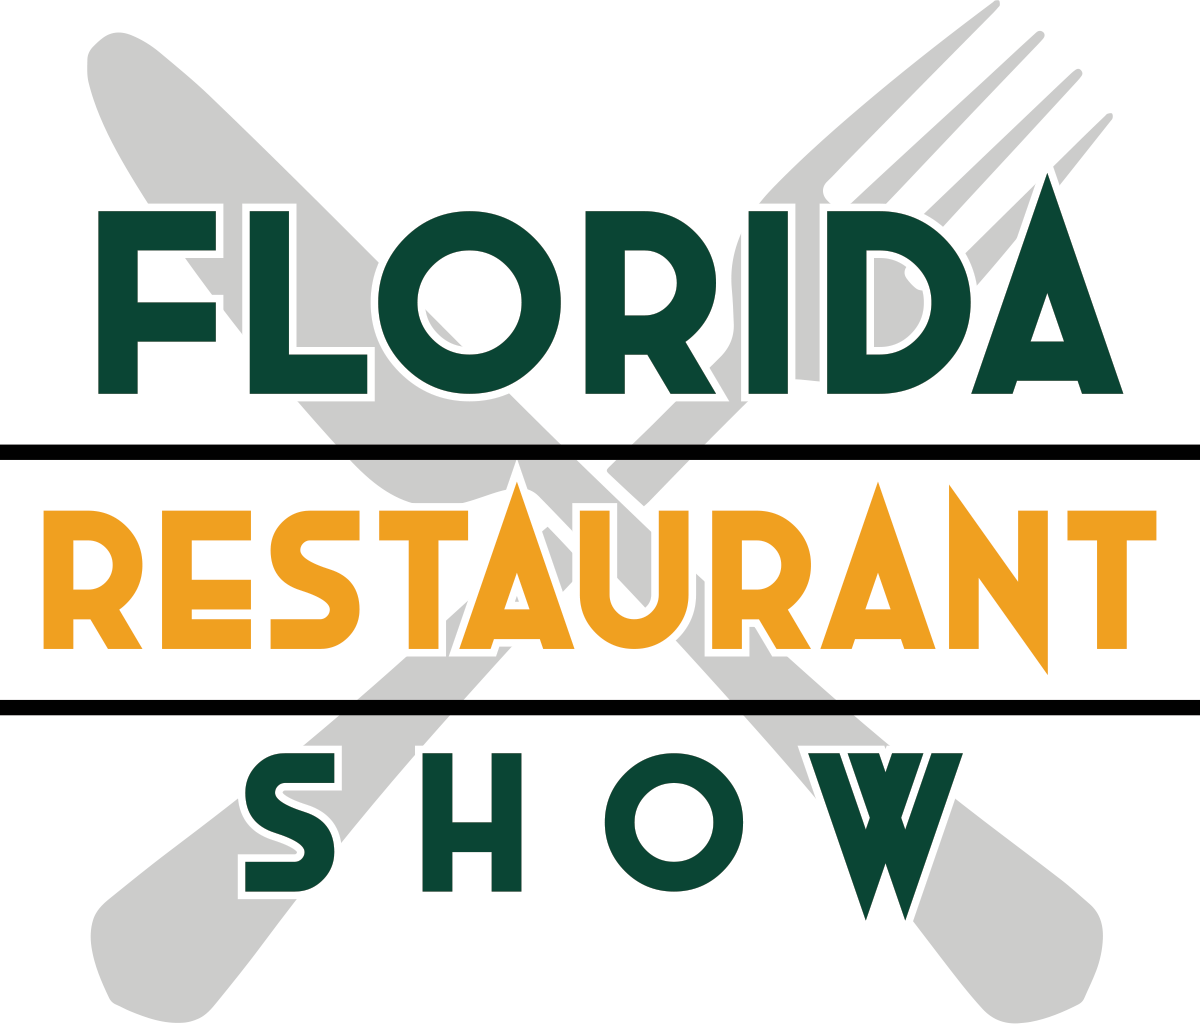 to the Florida Restaurant Show!